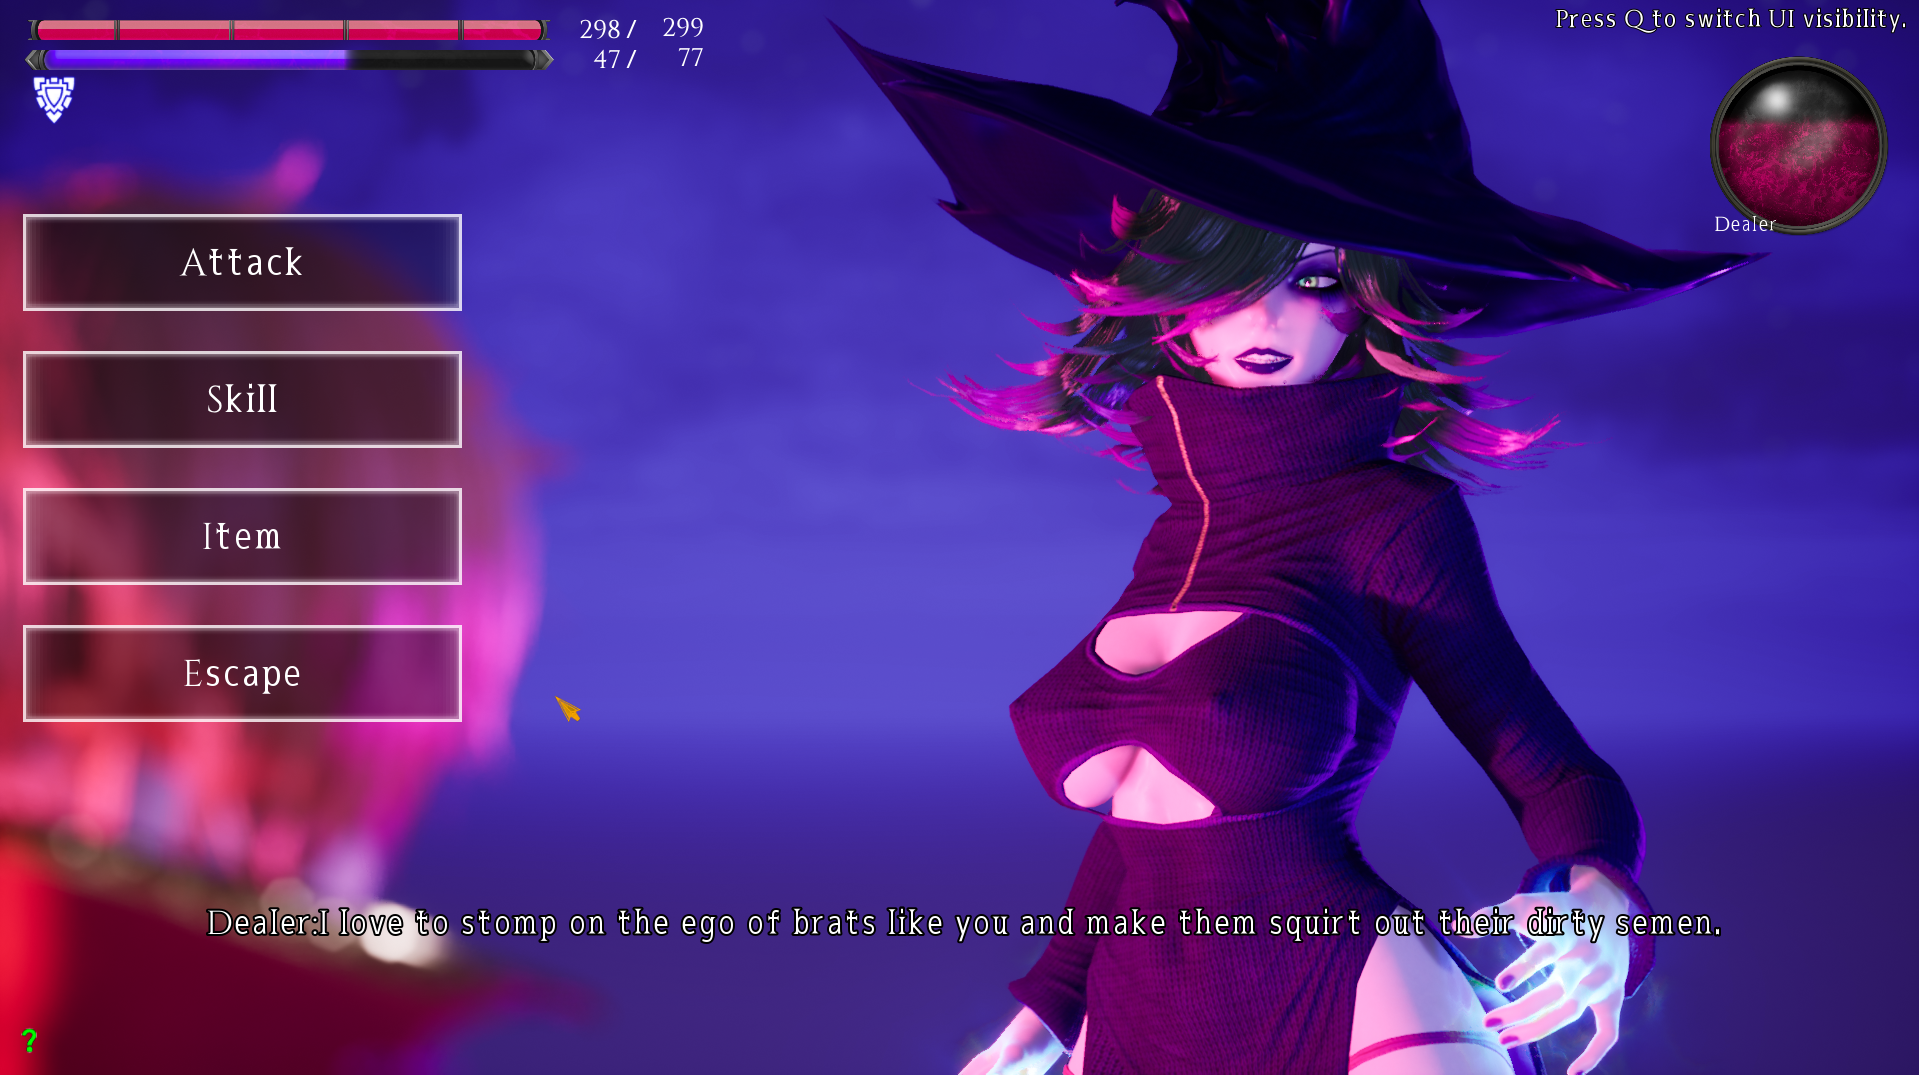 Under the Witch v0.1.4 - free game download, reviews, mega - xGames